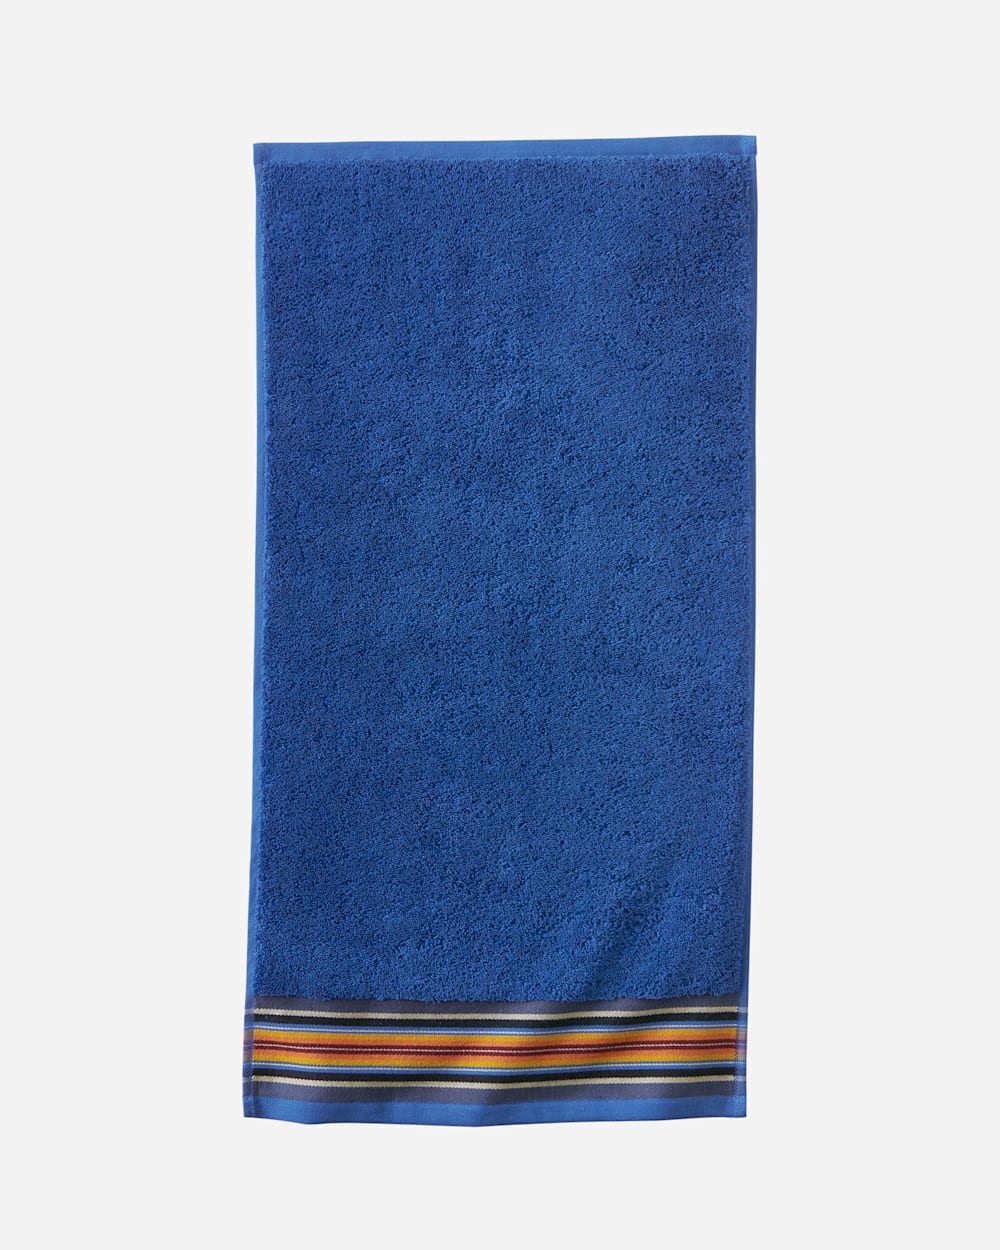 ALTERNATE VIEW OF SERAPE TOWEL SET IN BLUE image number 2